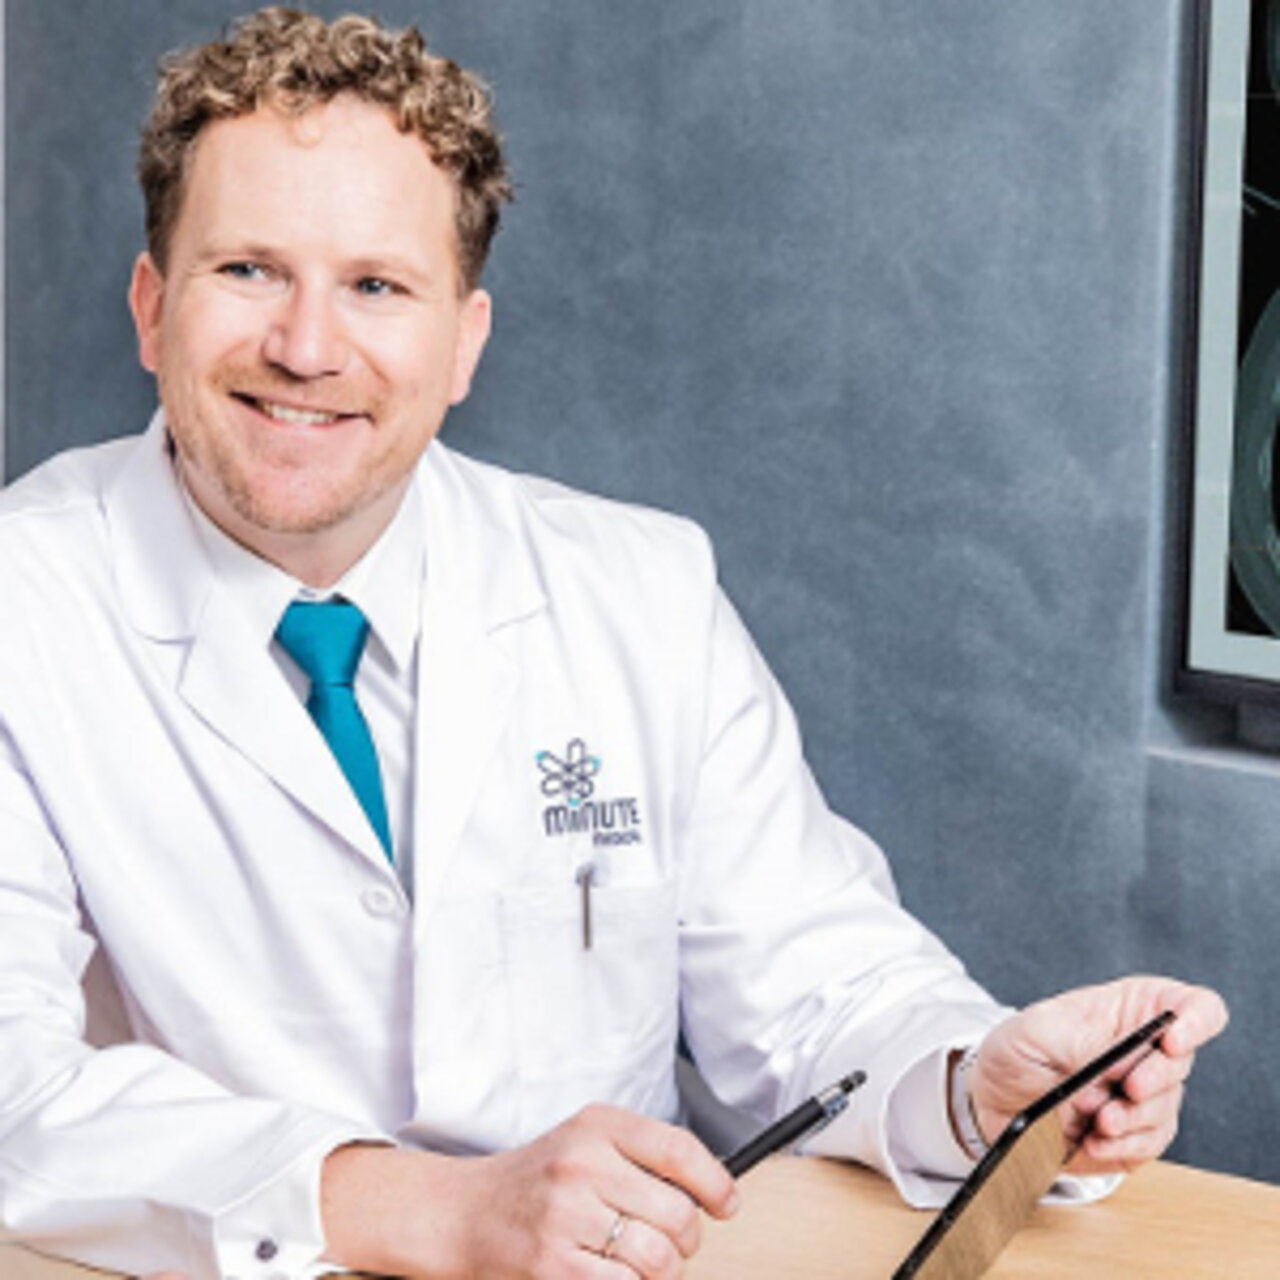 MINUTE medical - Prof. Dr Markus Hartenbach - Portrait